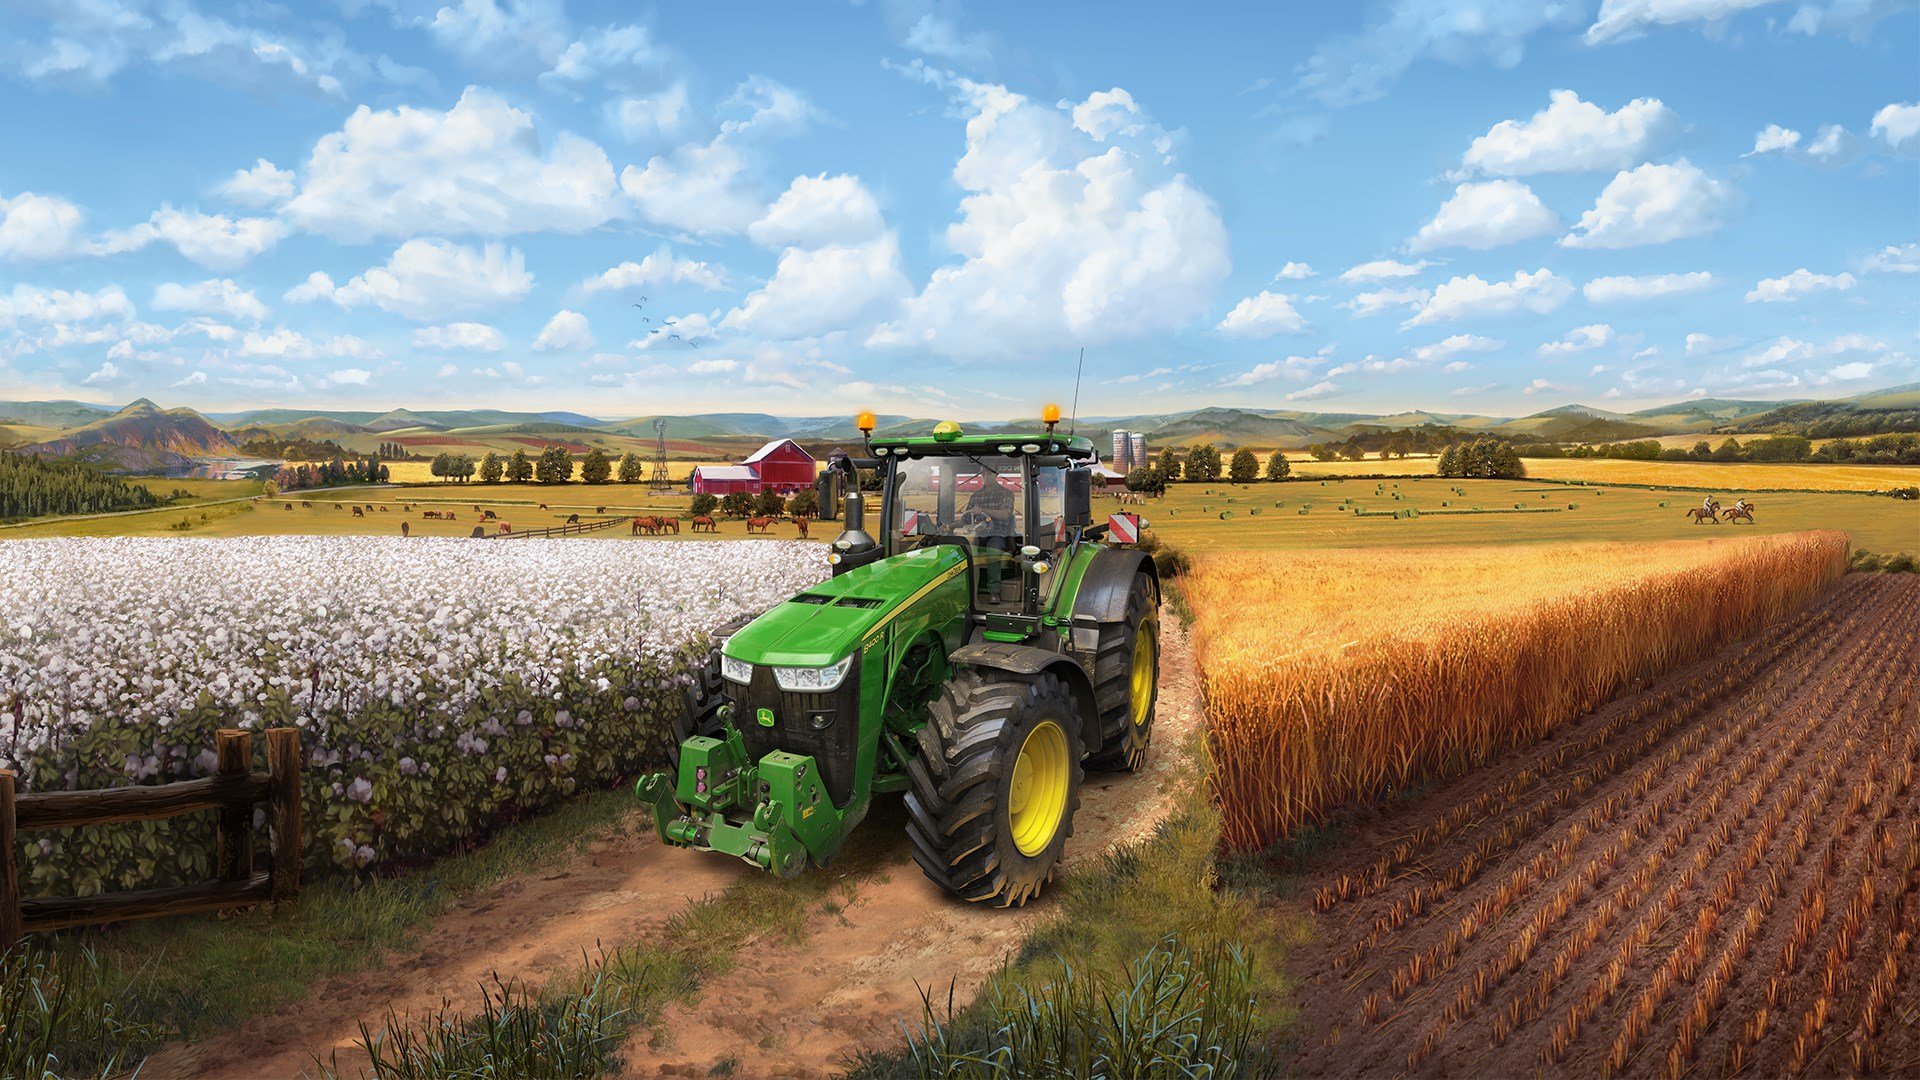 Farming Simulator 22 Steam Charts & Stats